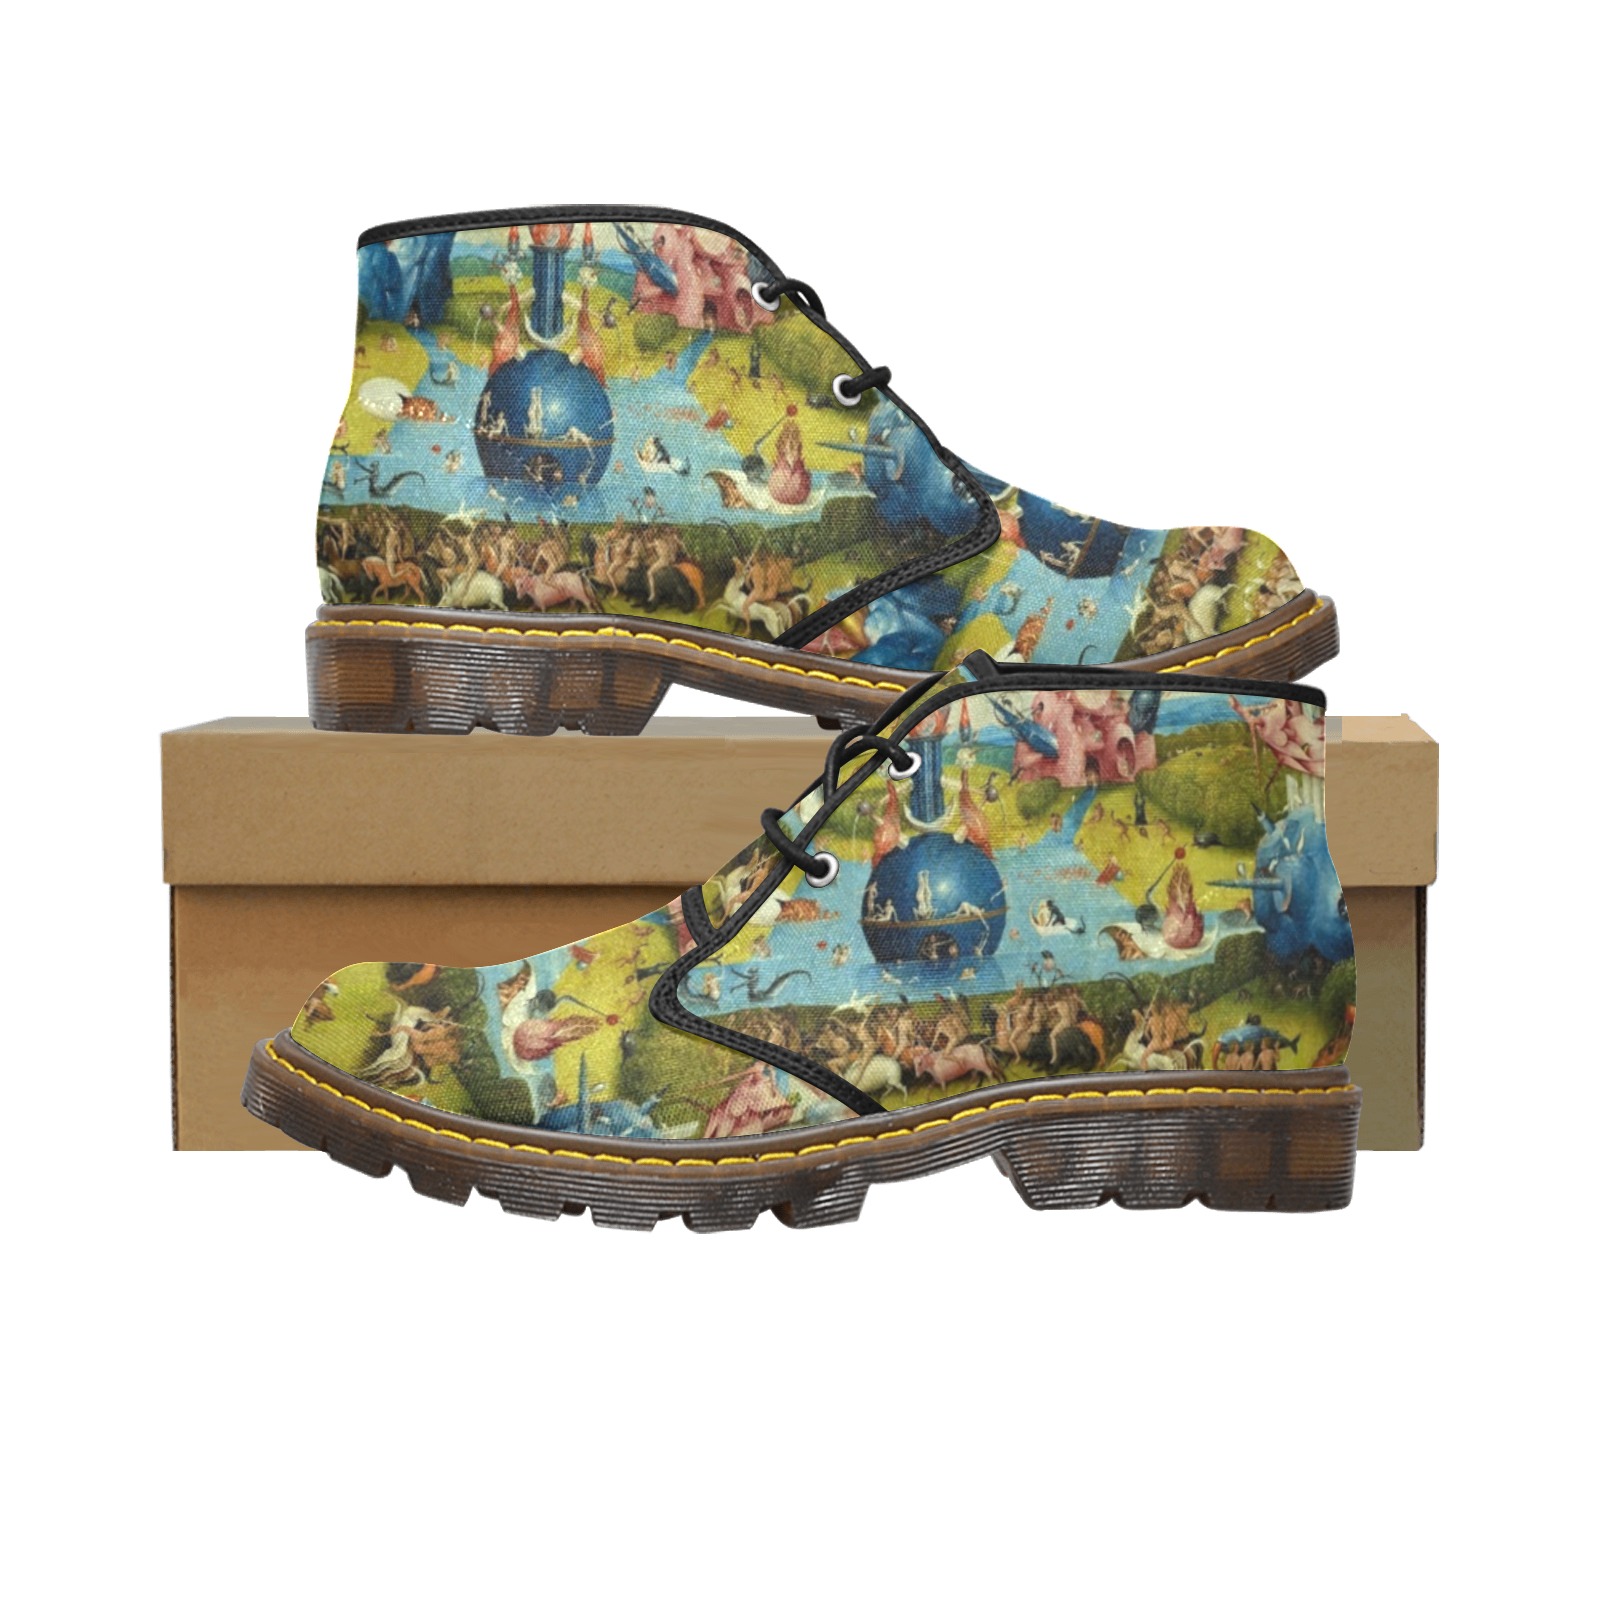 Garden of Earthly Delights 5 Men's Canvas Chukka Boots (Model 2402-1)